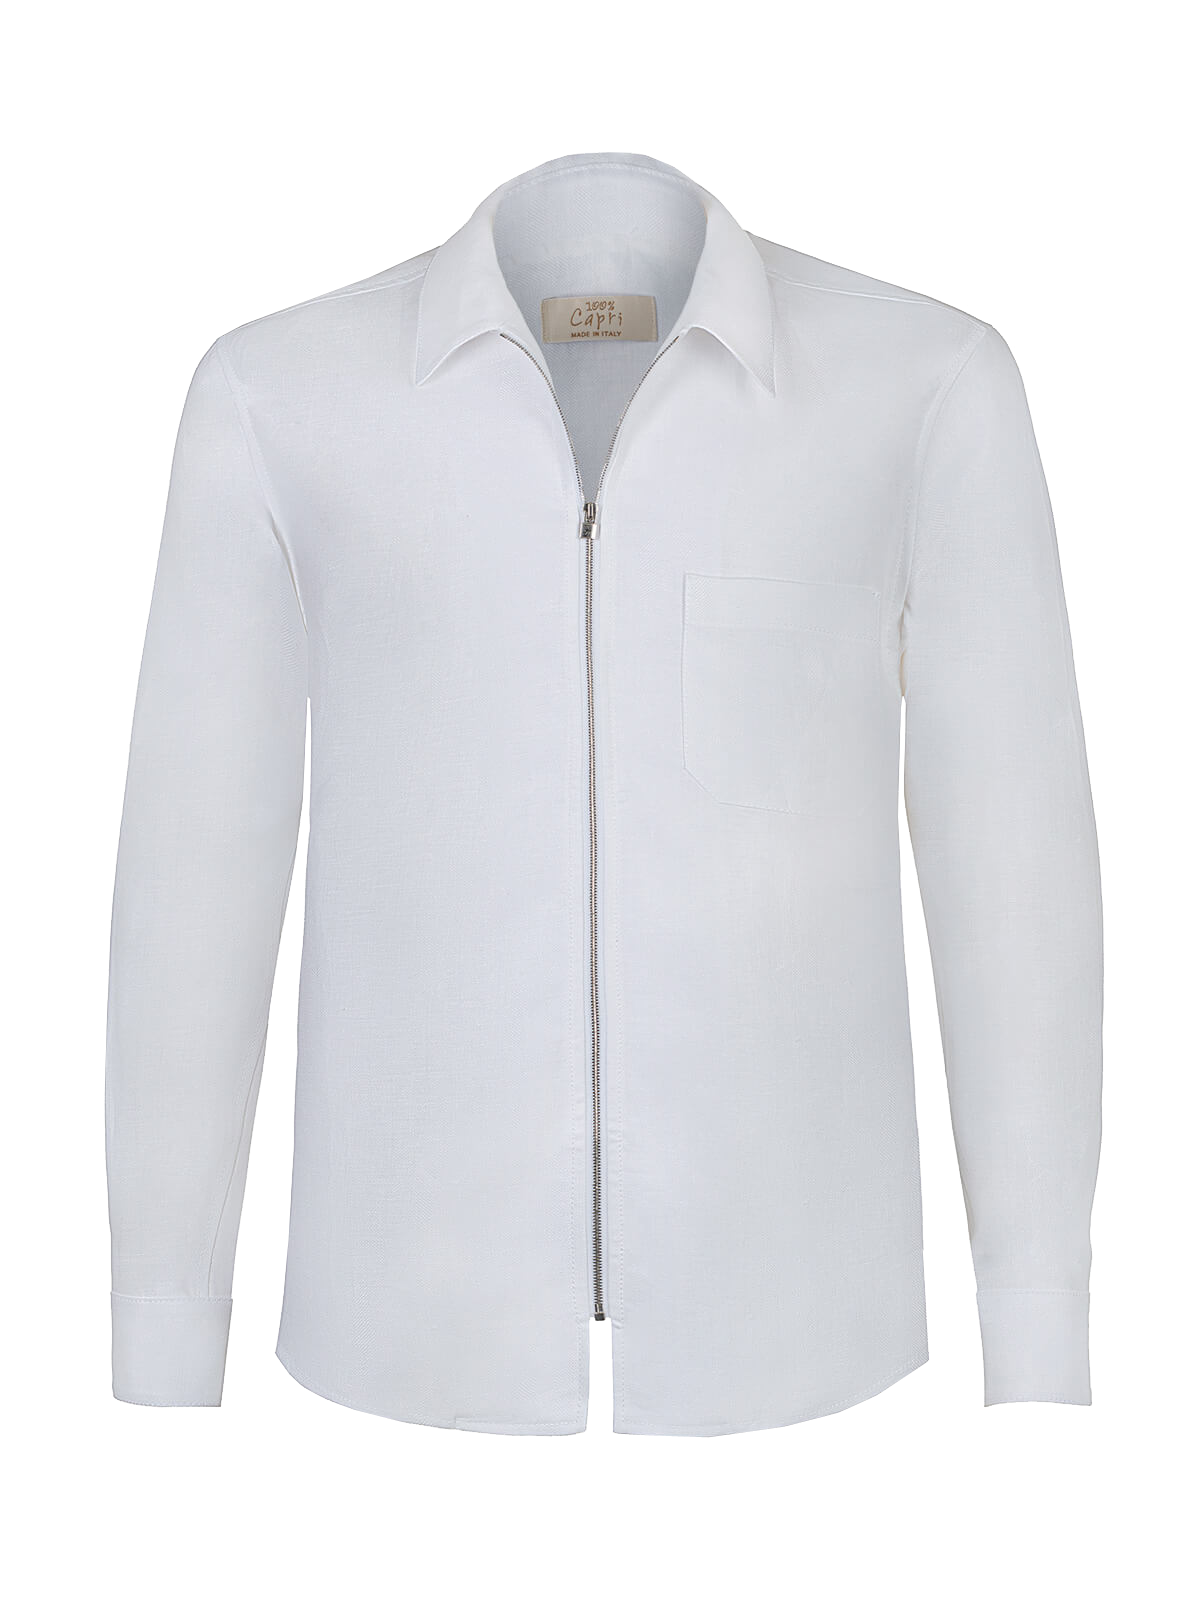 Camicia Zip Malta 100% Capri for man linen white shirt front